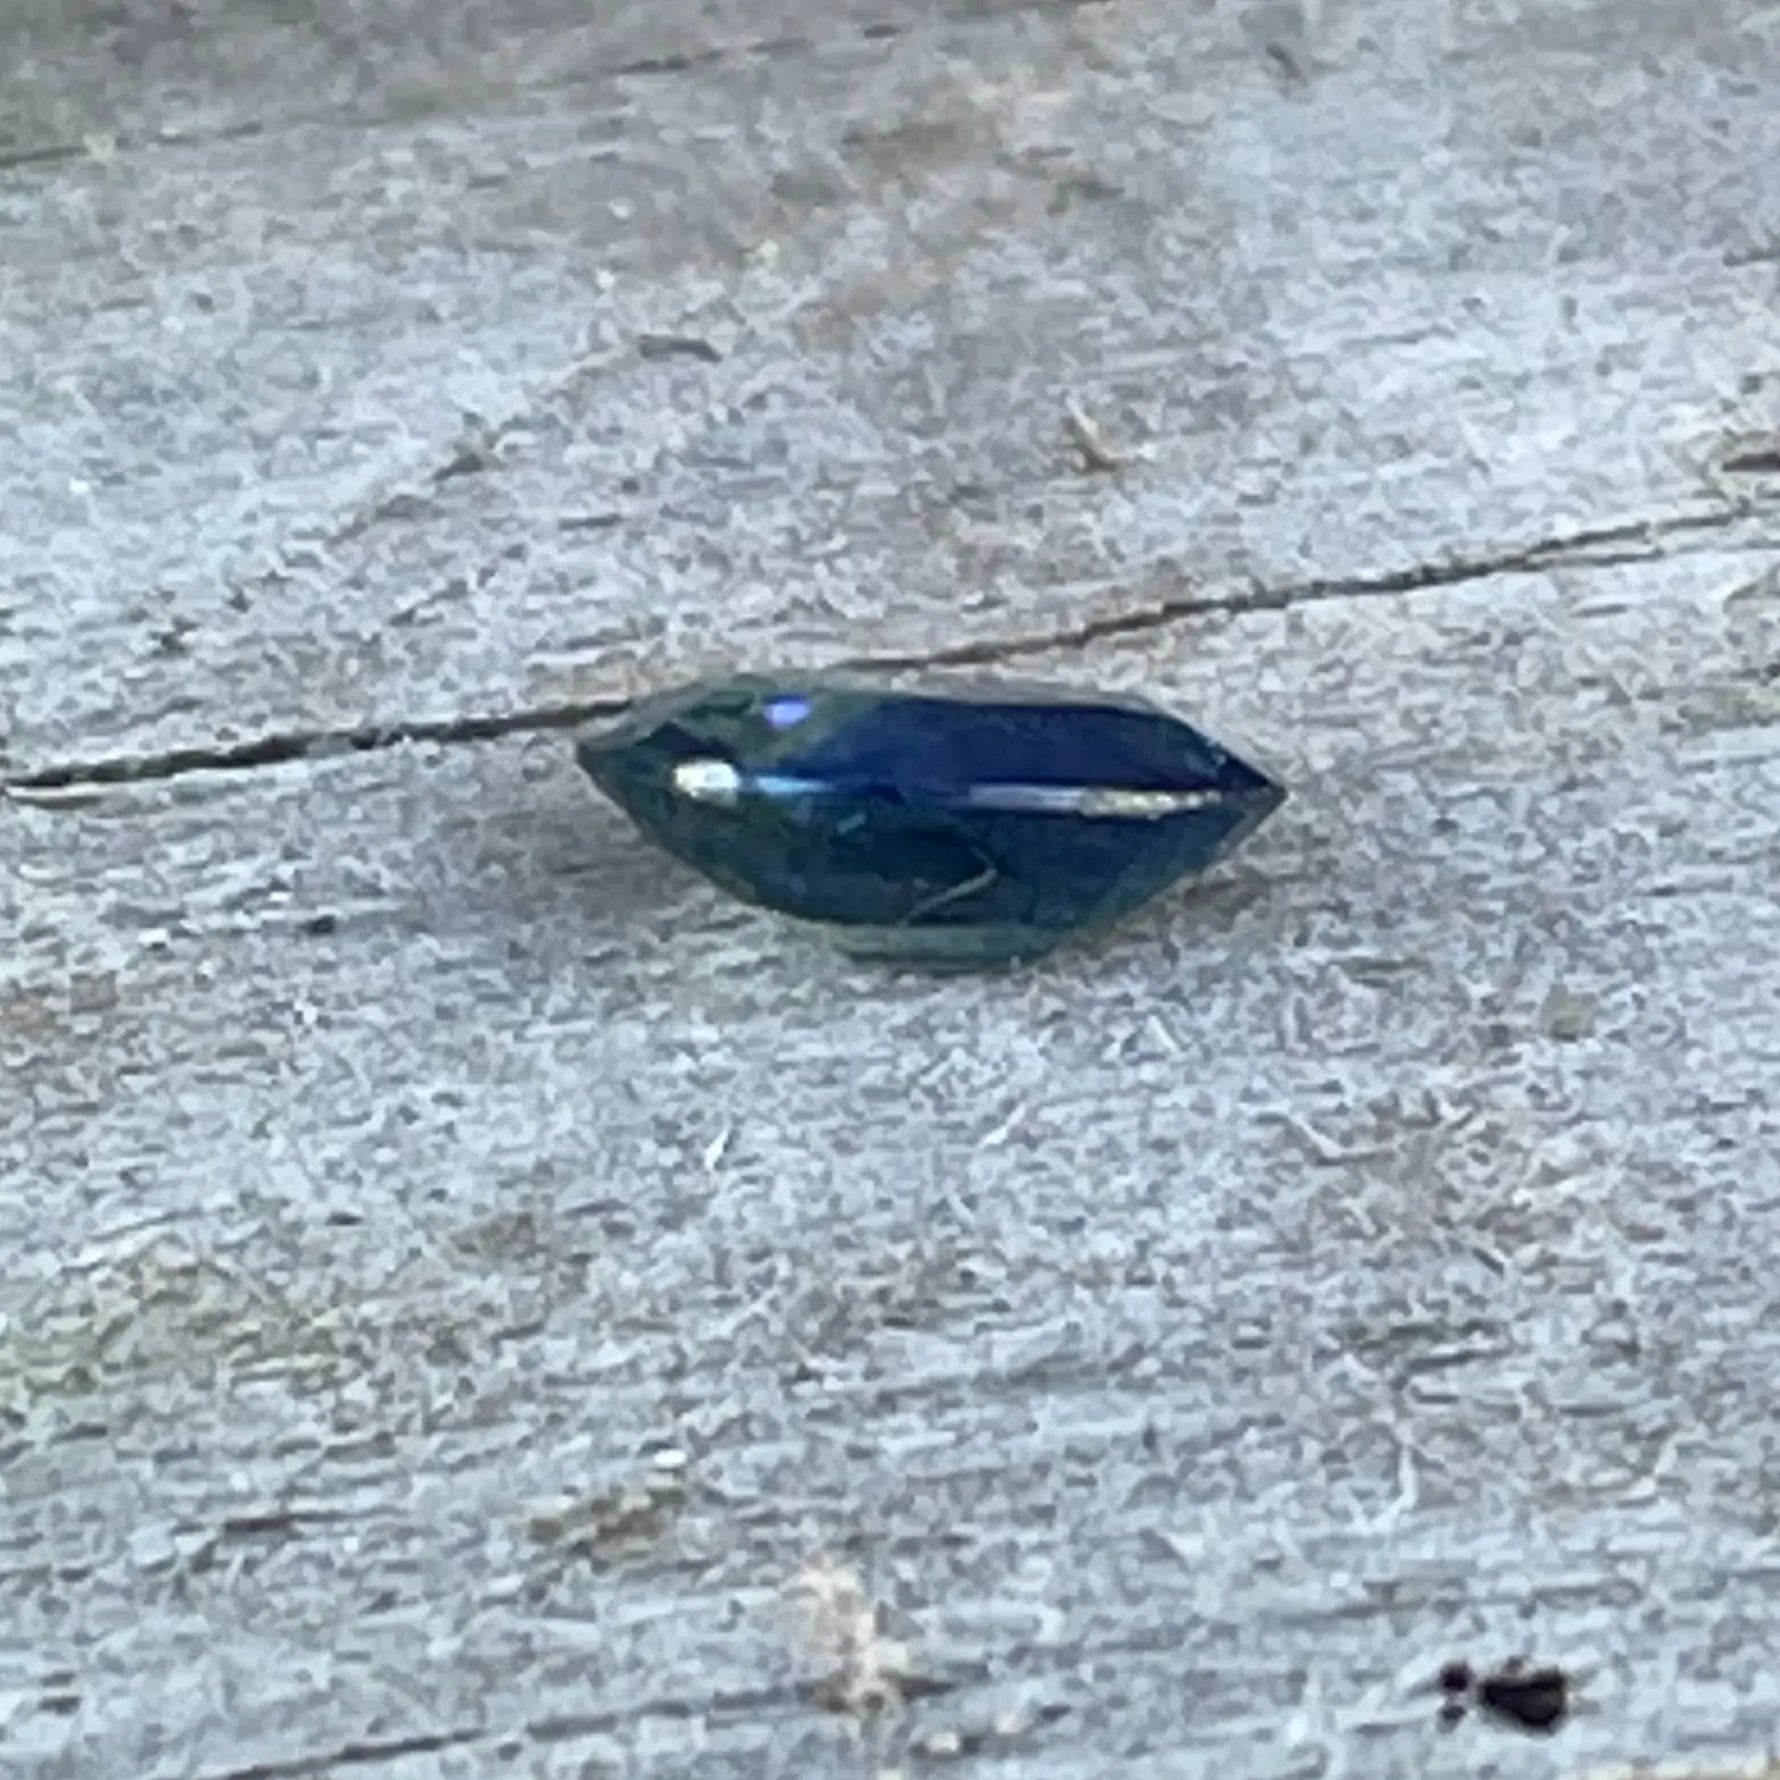 Natural Blue Yellow Sapphire gems-756e